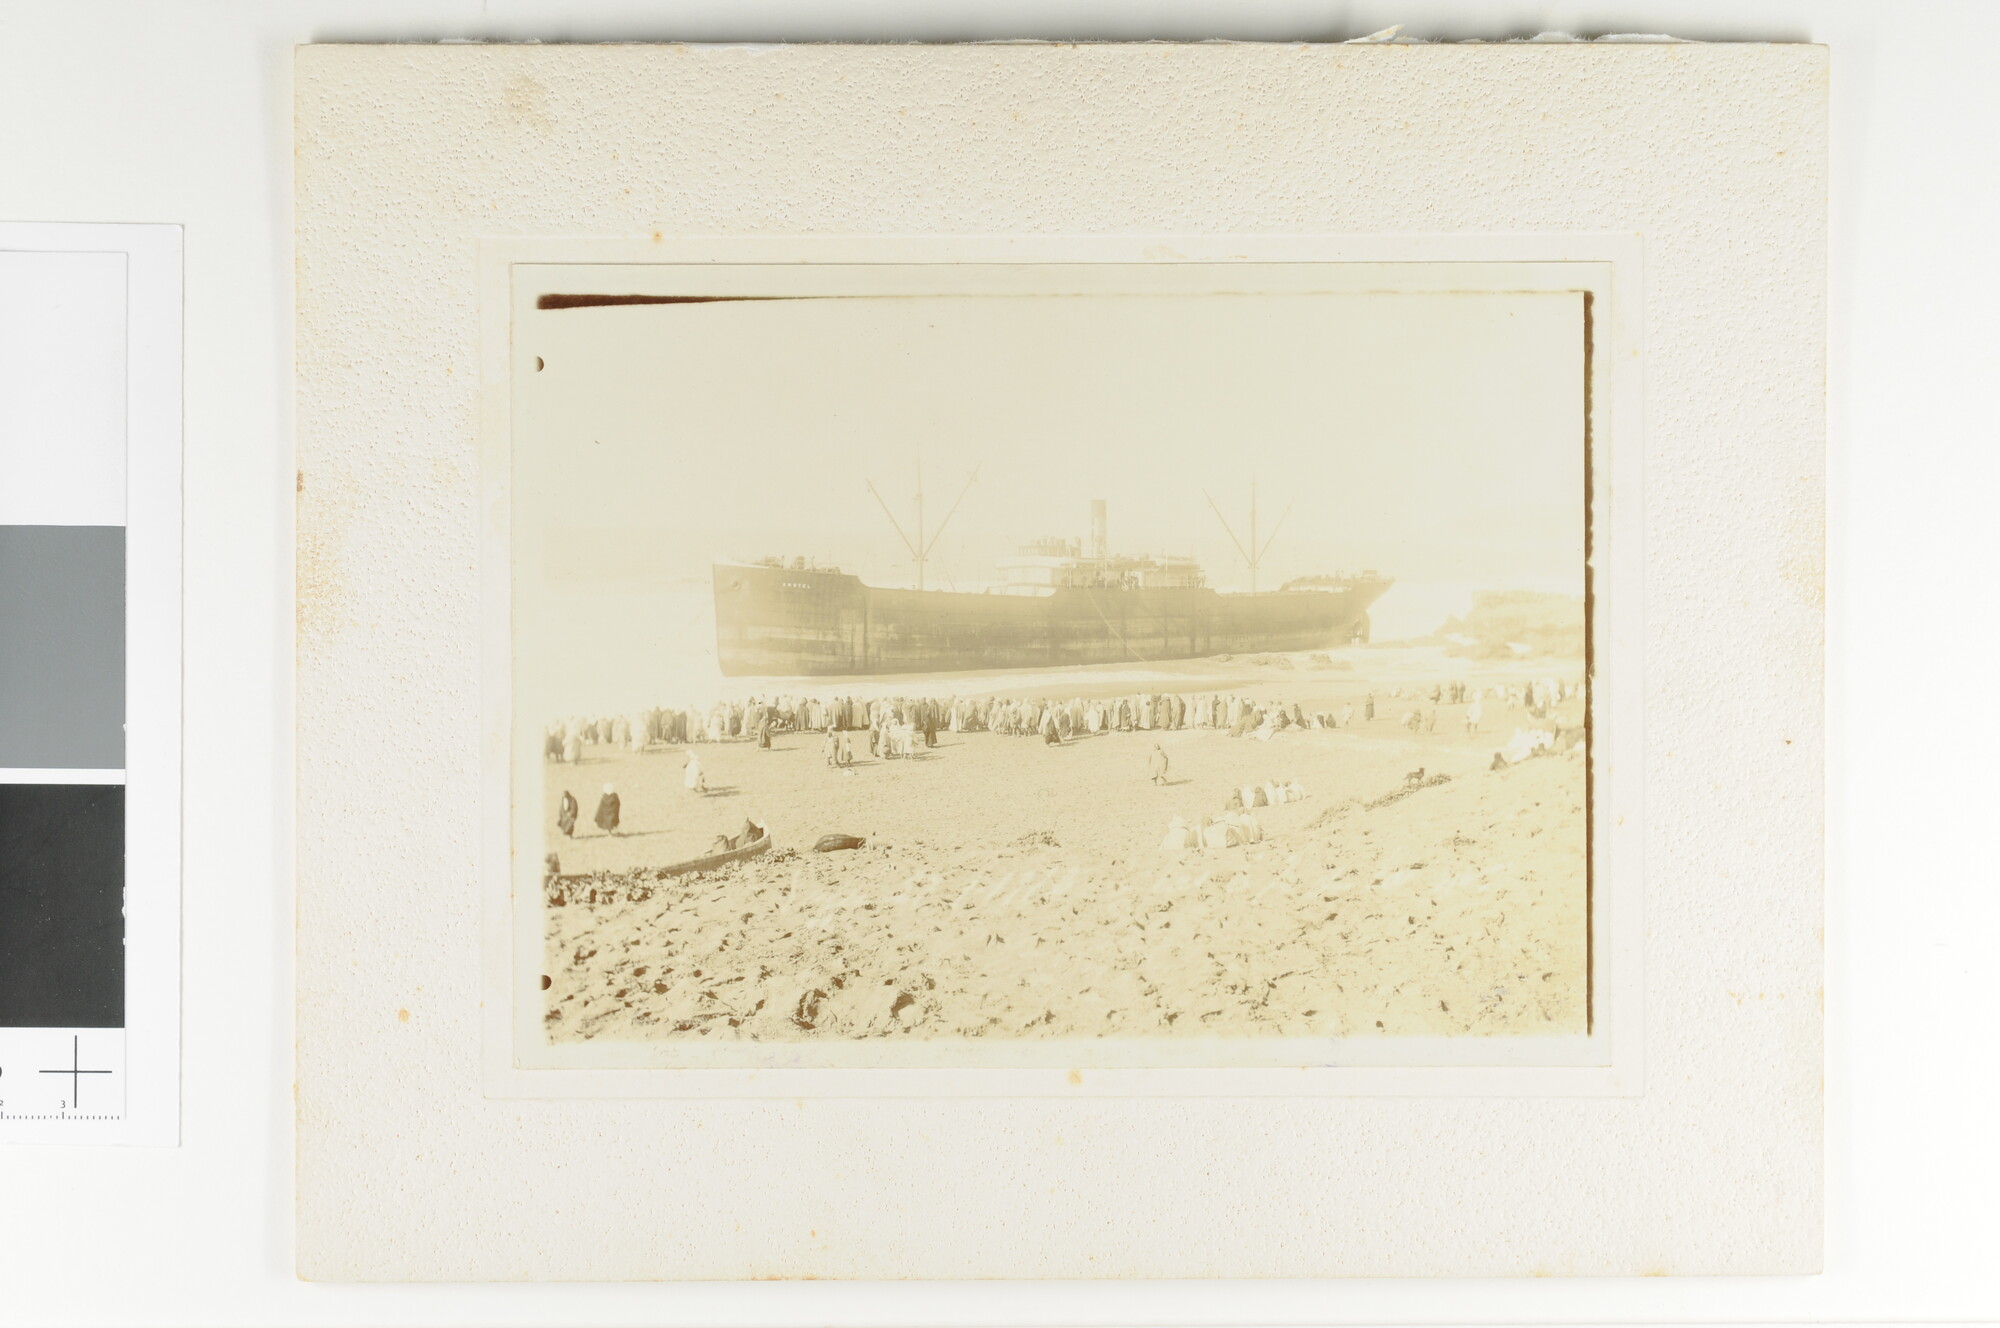 1989.0083; Het Nederlandse schip ss. 'Amstel' gestrand te Marokko op 27 januari 1912; foto